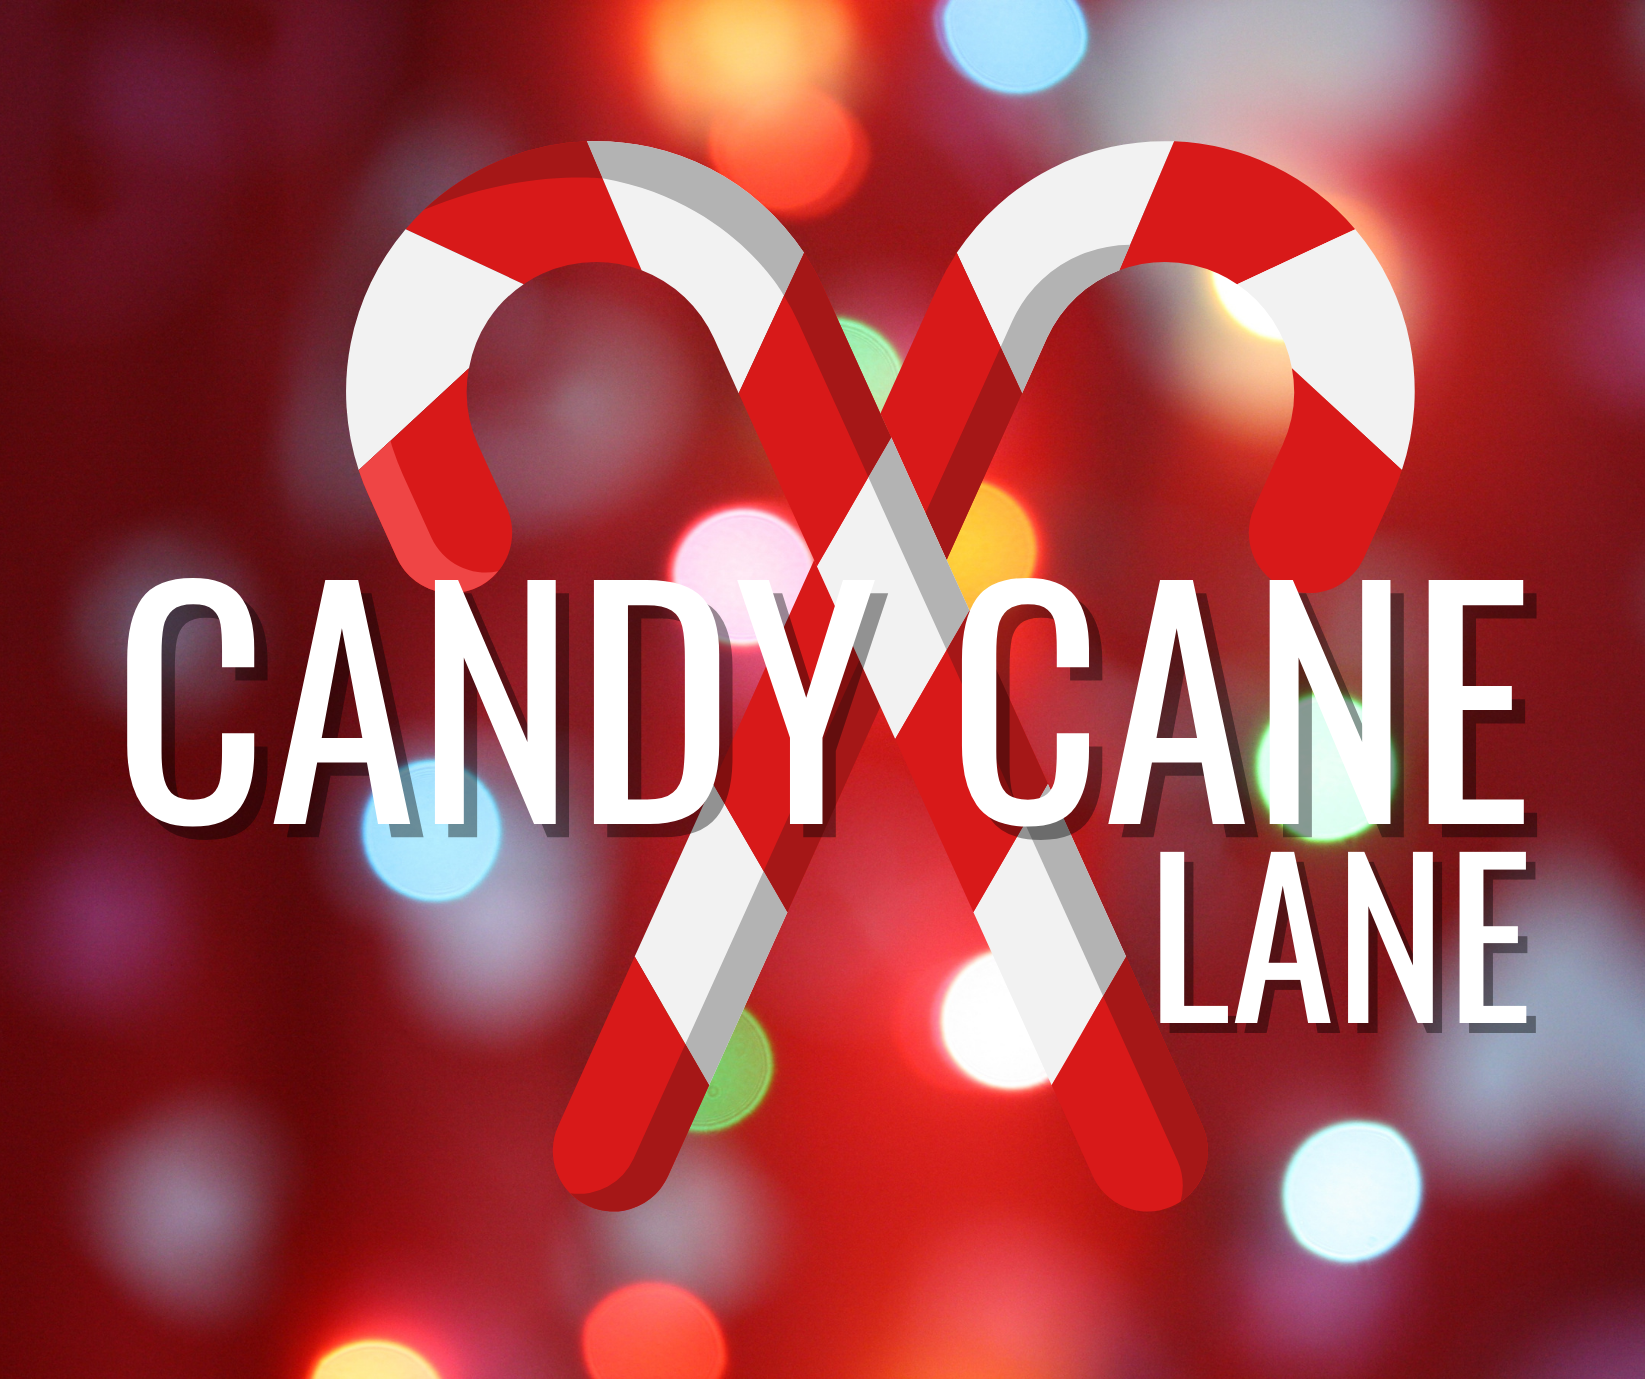 Candy cane lane warren county memorial library warrenton nc